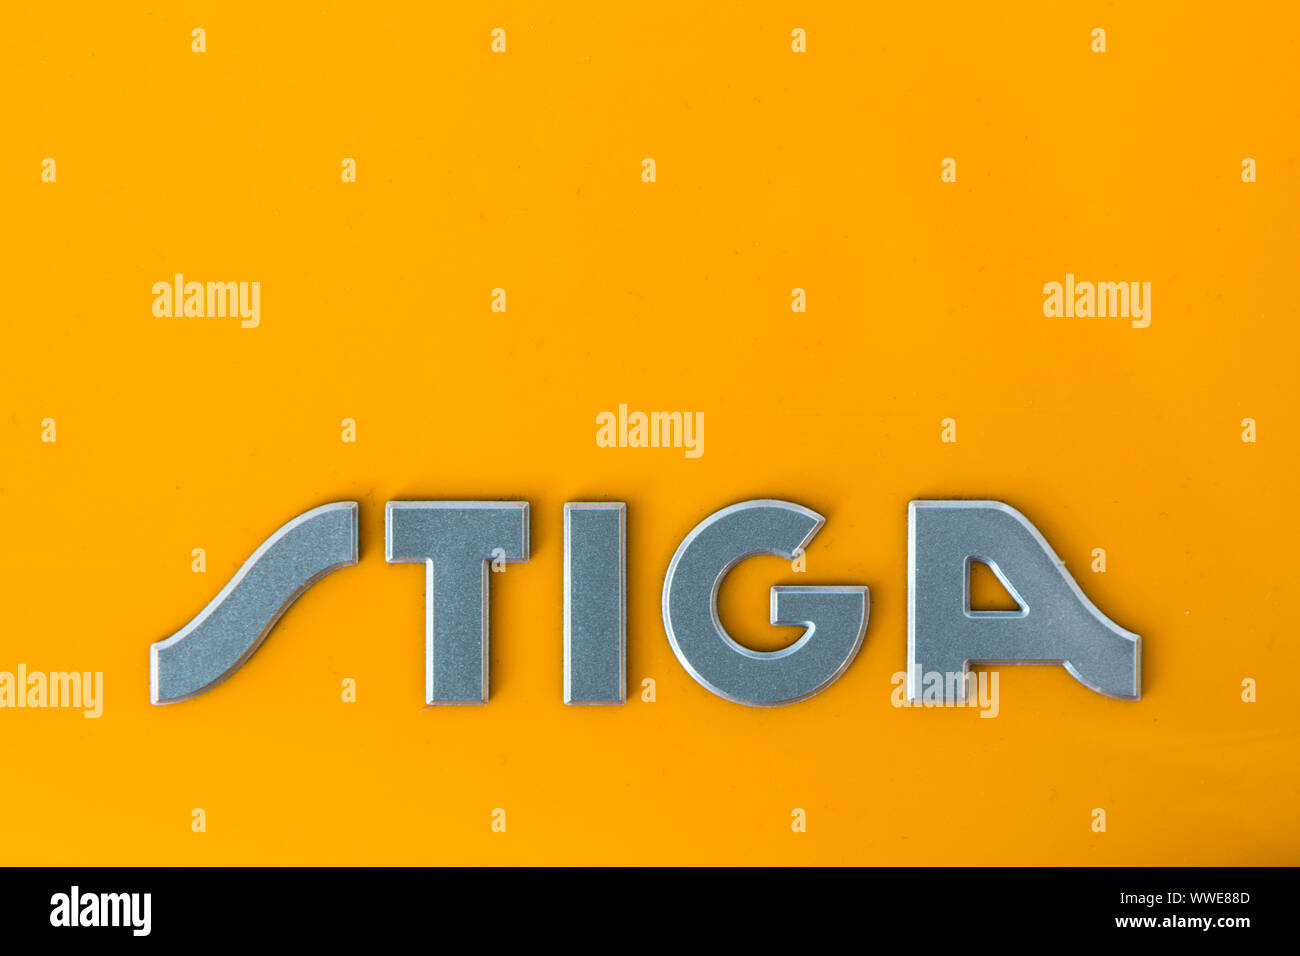 Stiga logo on yellow background Stock Photo - Alamy